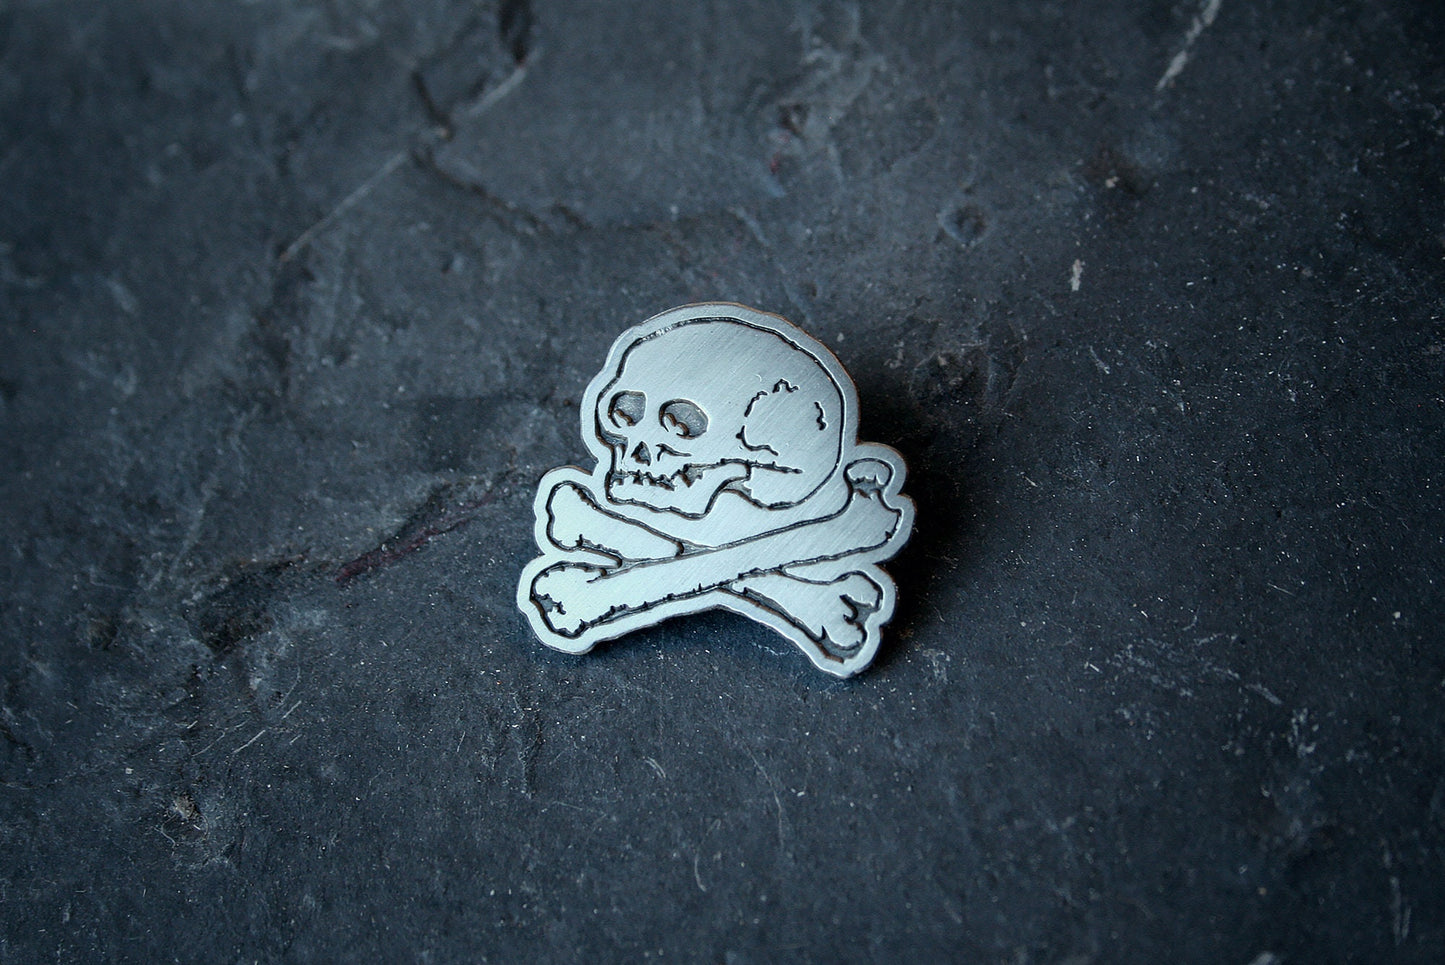 Skull with crossed bones, skull crossbone, old school style - PIN